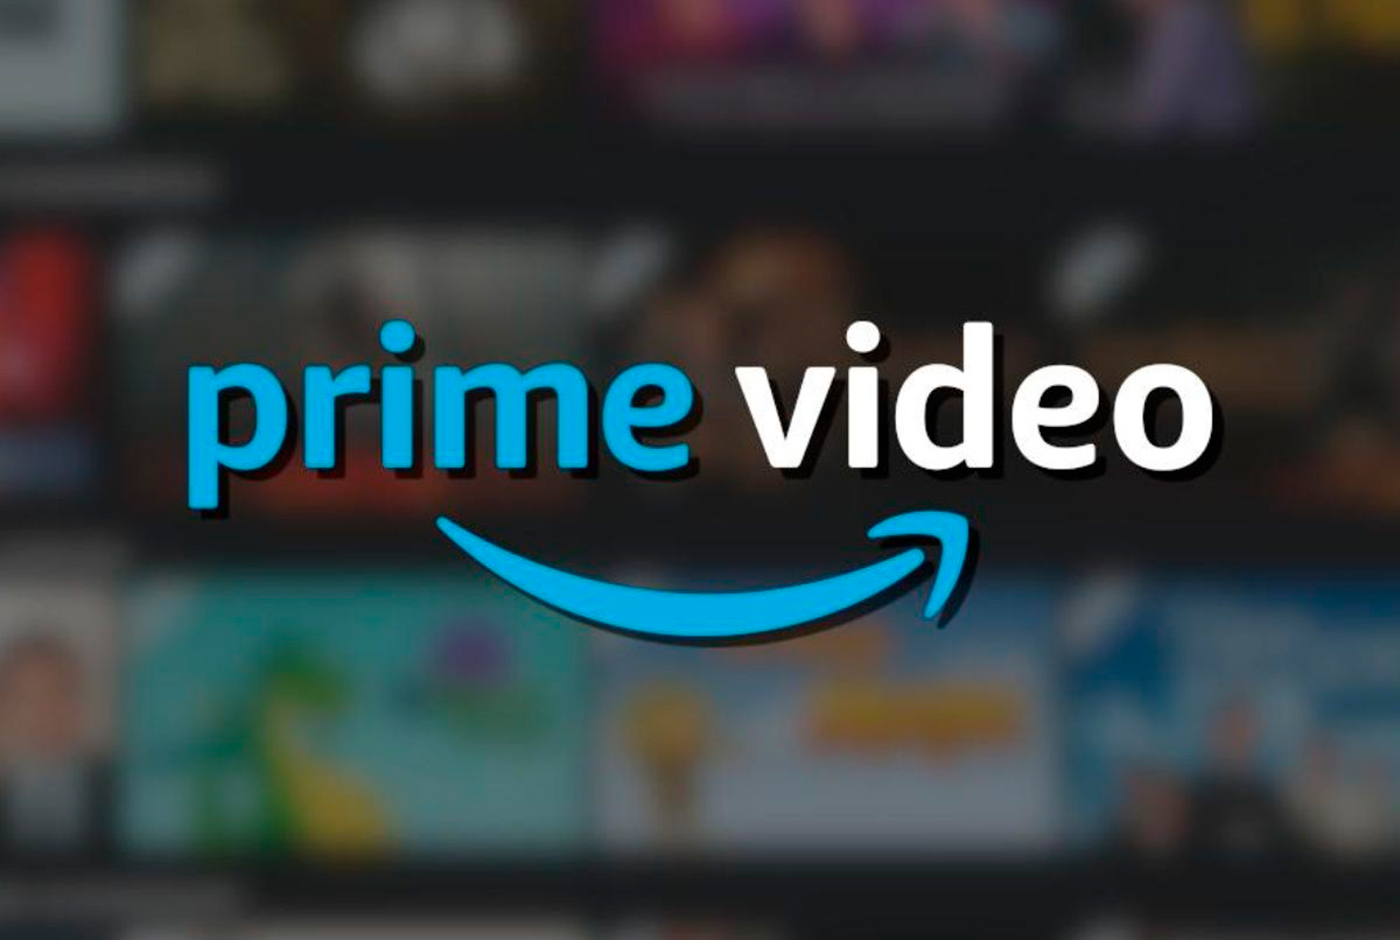  Clientes de Amazon Prime Video cancelan servicio por aumento de precio